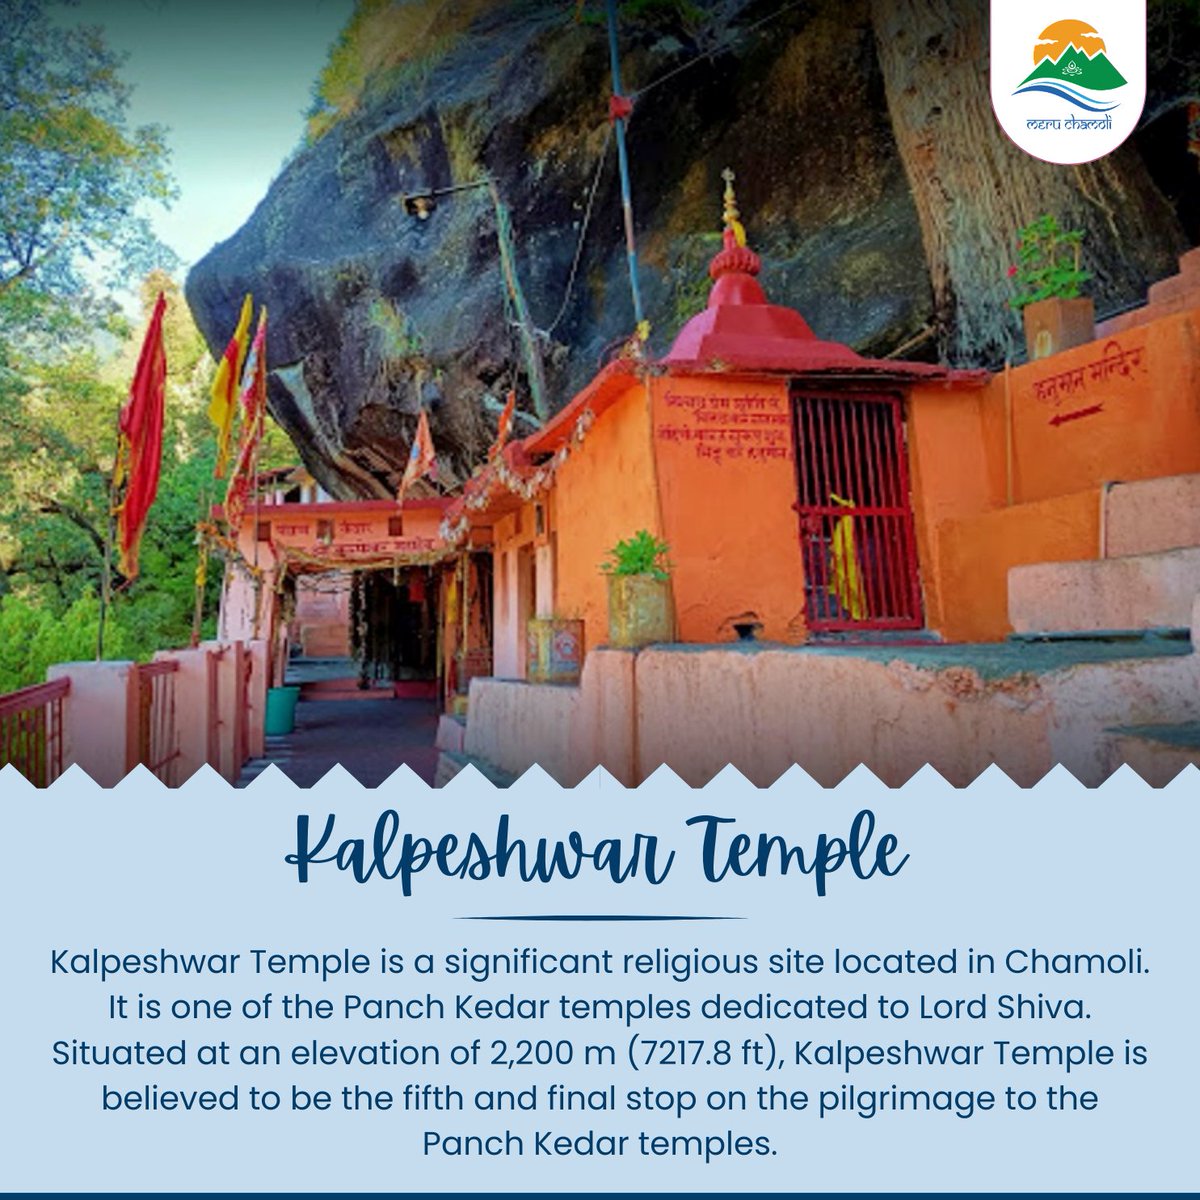 🌟 Embrace Spiritual Serenity at Kalpeshwar Temple 🛕

#Chamoli #Uttarakhand #KalpeshwarTemple #PanchKedar #HimalayanSpirituality #DivineRetreat #SacredJourney #NatureAndDevotion #SpiritualBliss #GarhwalHimalayas